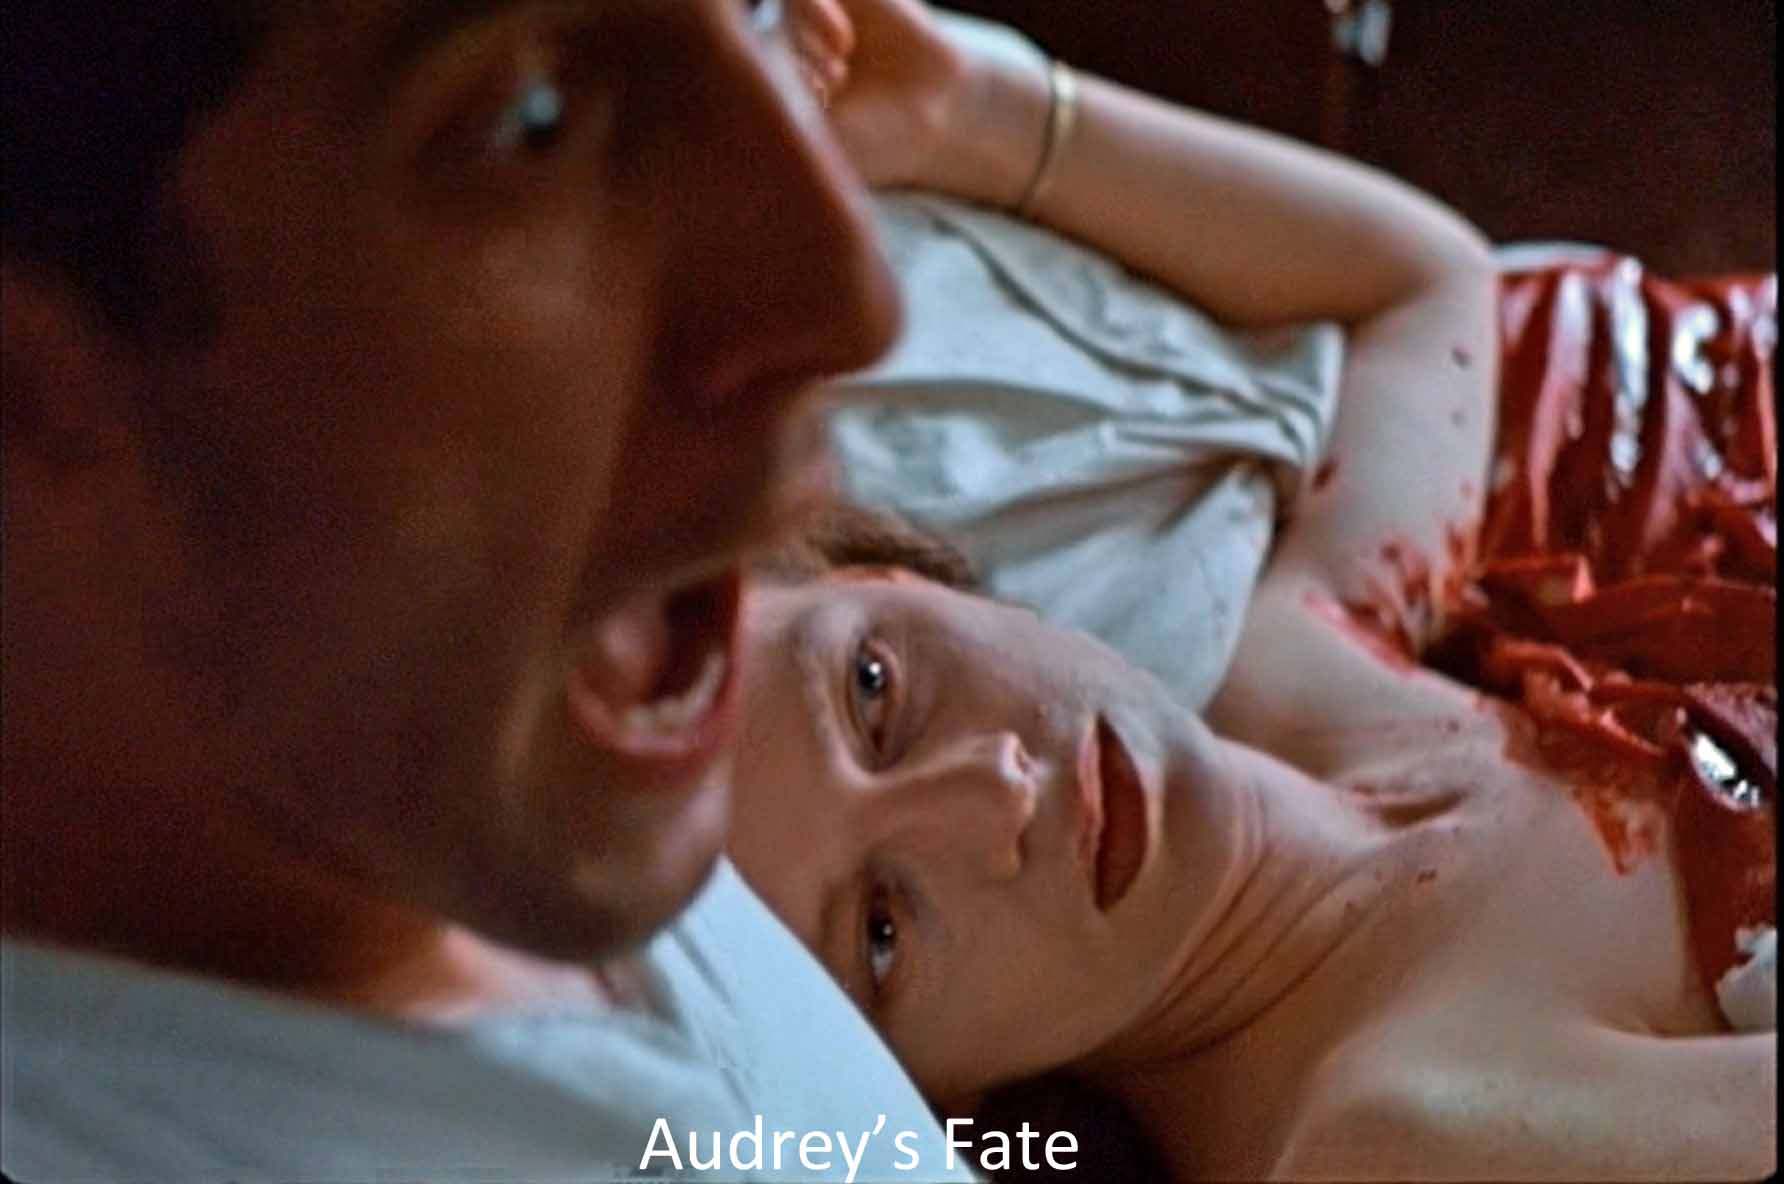 Audrey's fate